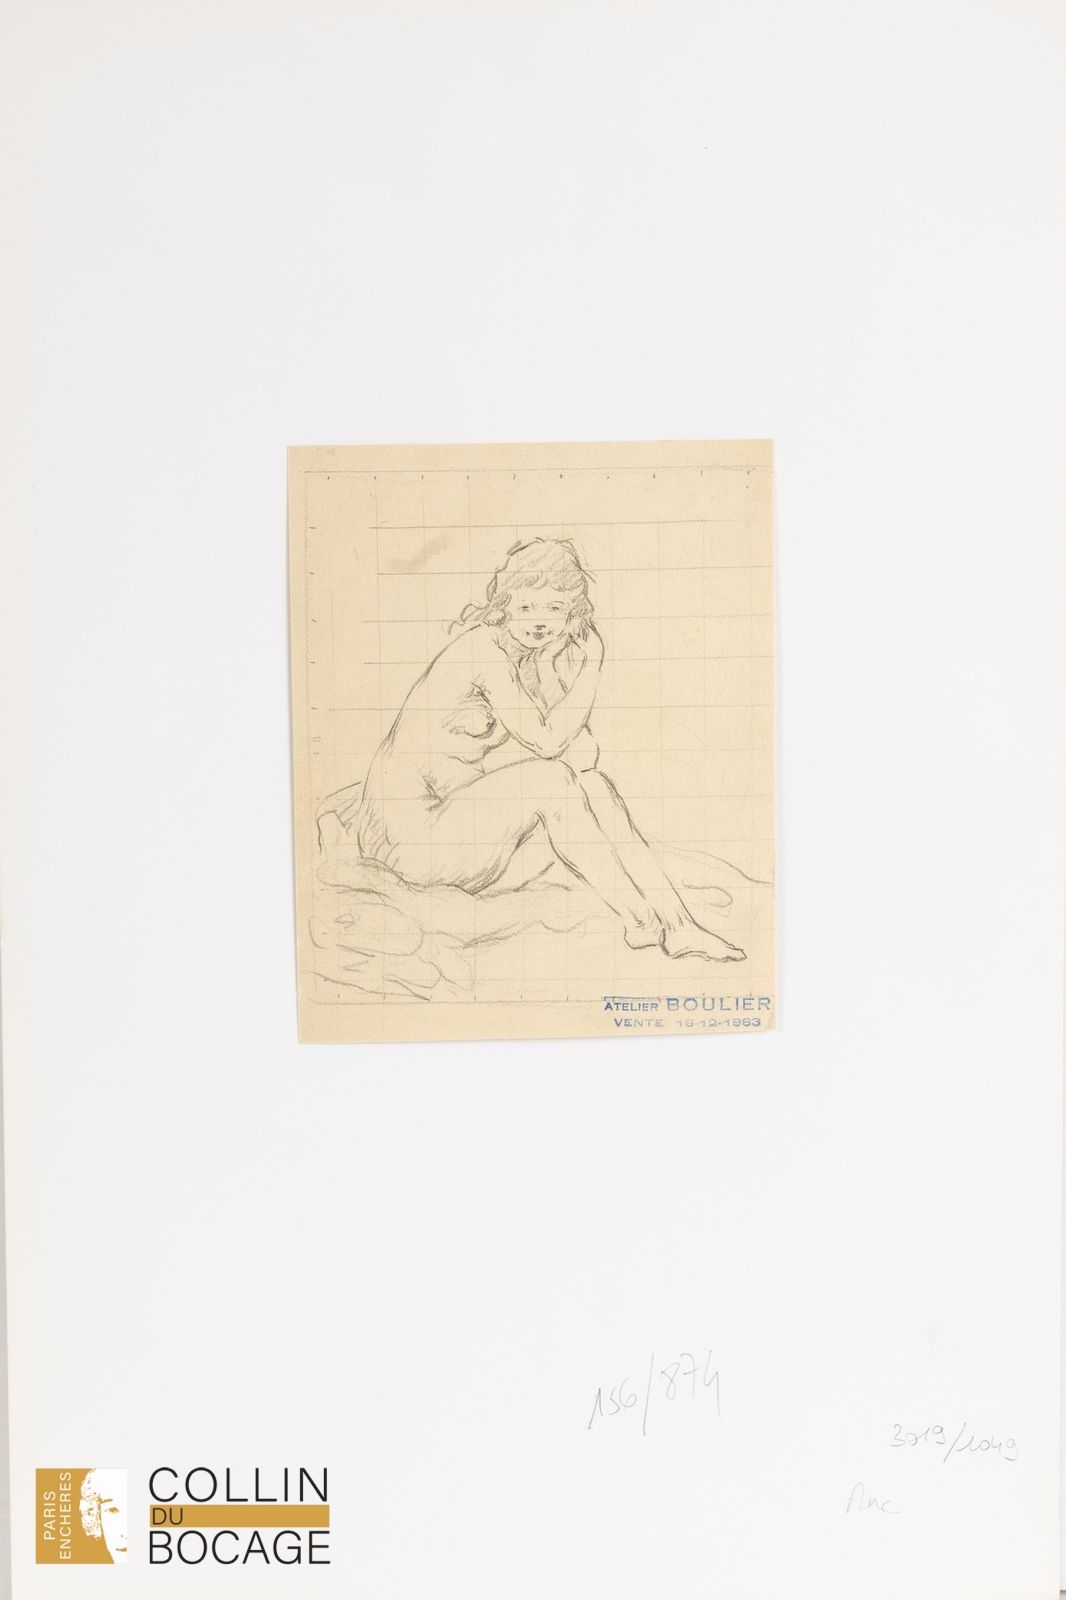 Null 吕西安-布利埃（1882-1963 年）
坐姿裸女
铅笔、方格纸
工作室销售印章
18 x 14.5 厘米